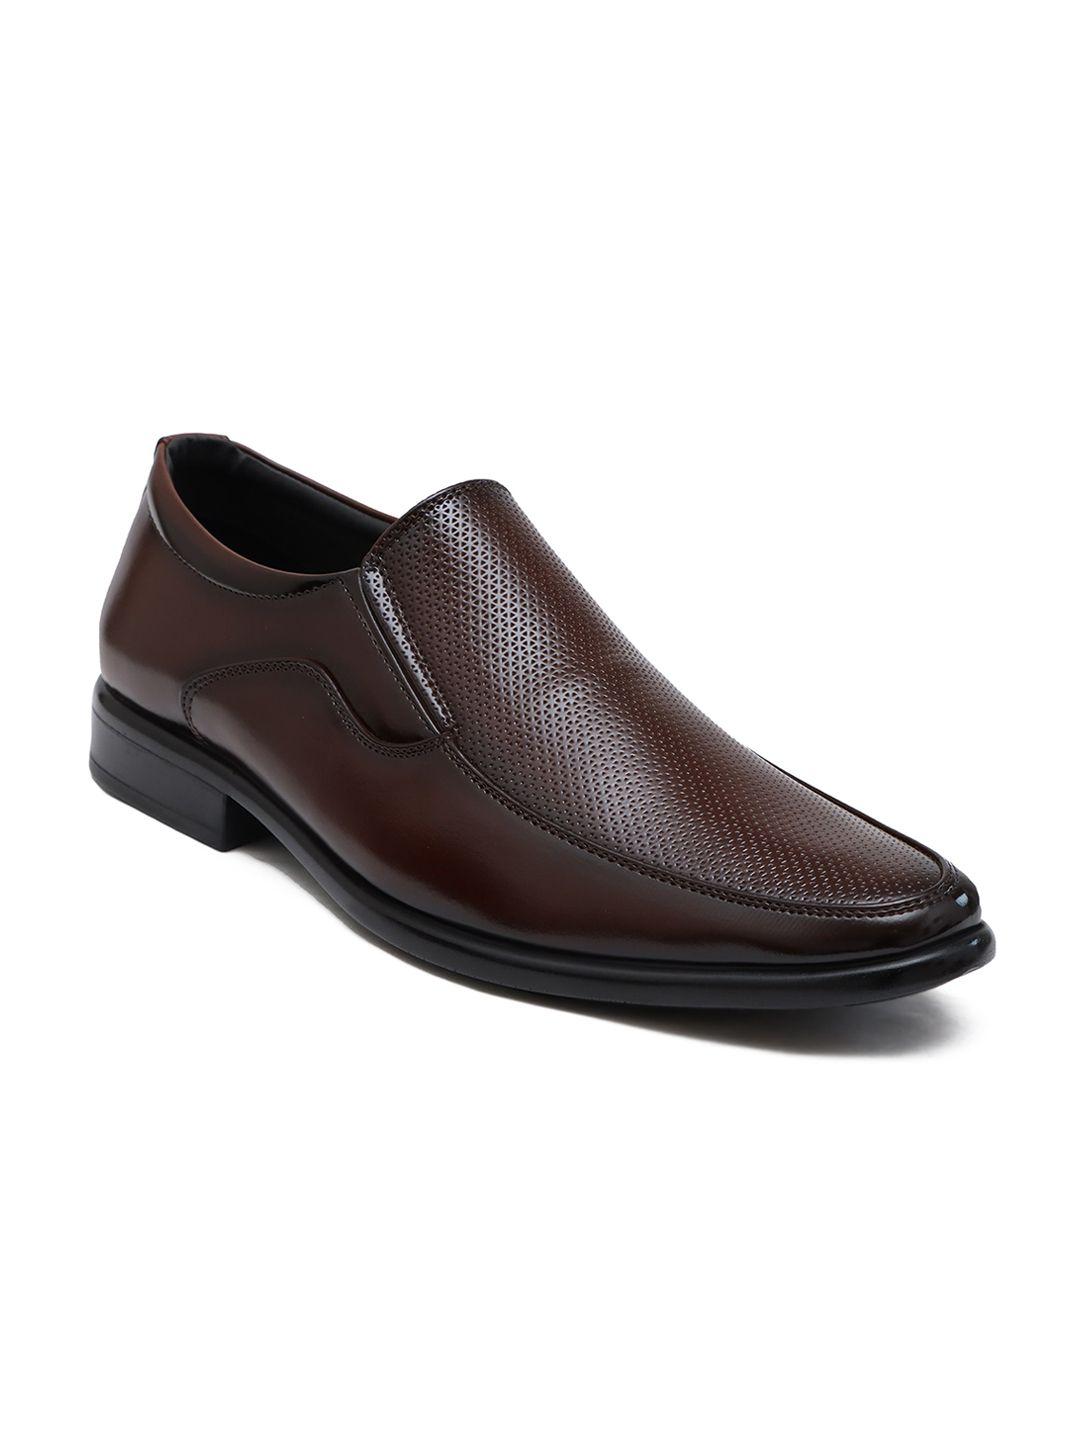 birgos men brown textured formal slip-on loafers